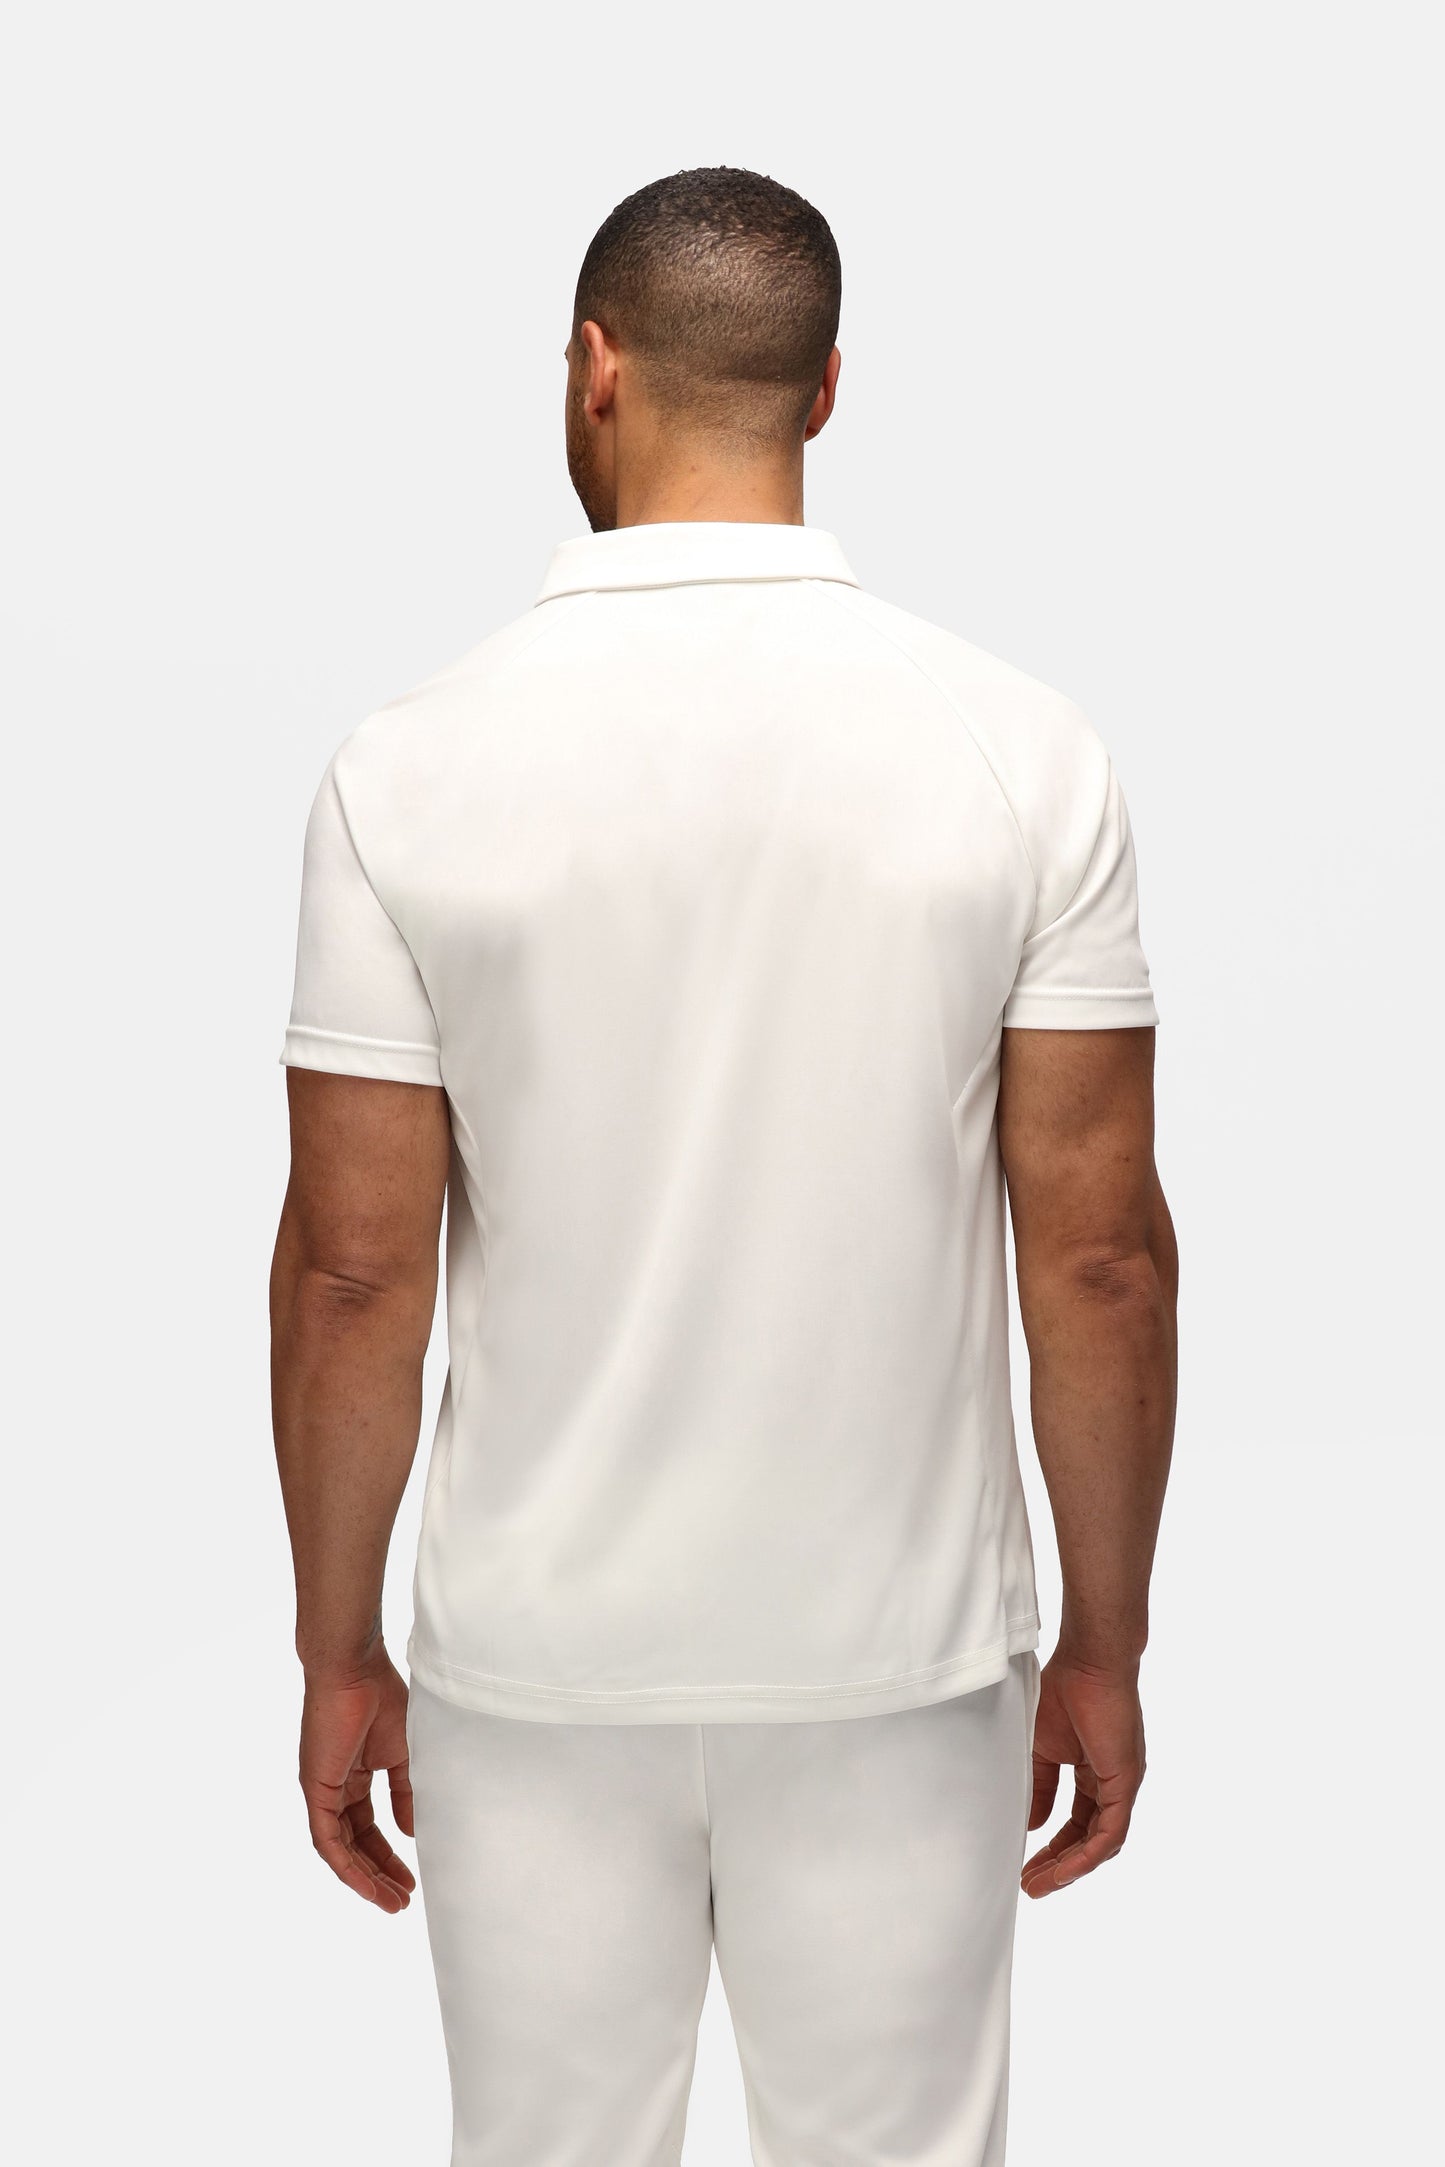 Eco Tech Cricket Shirt Short Sleeve